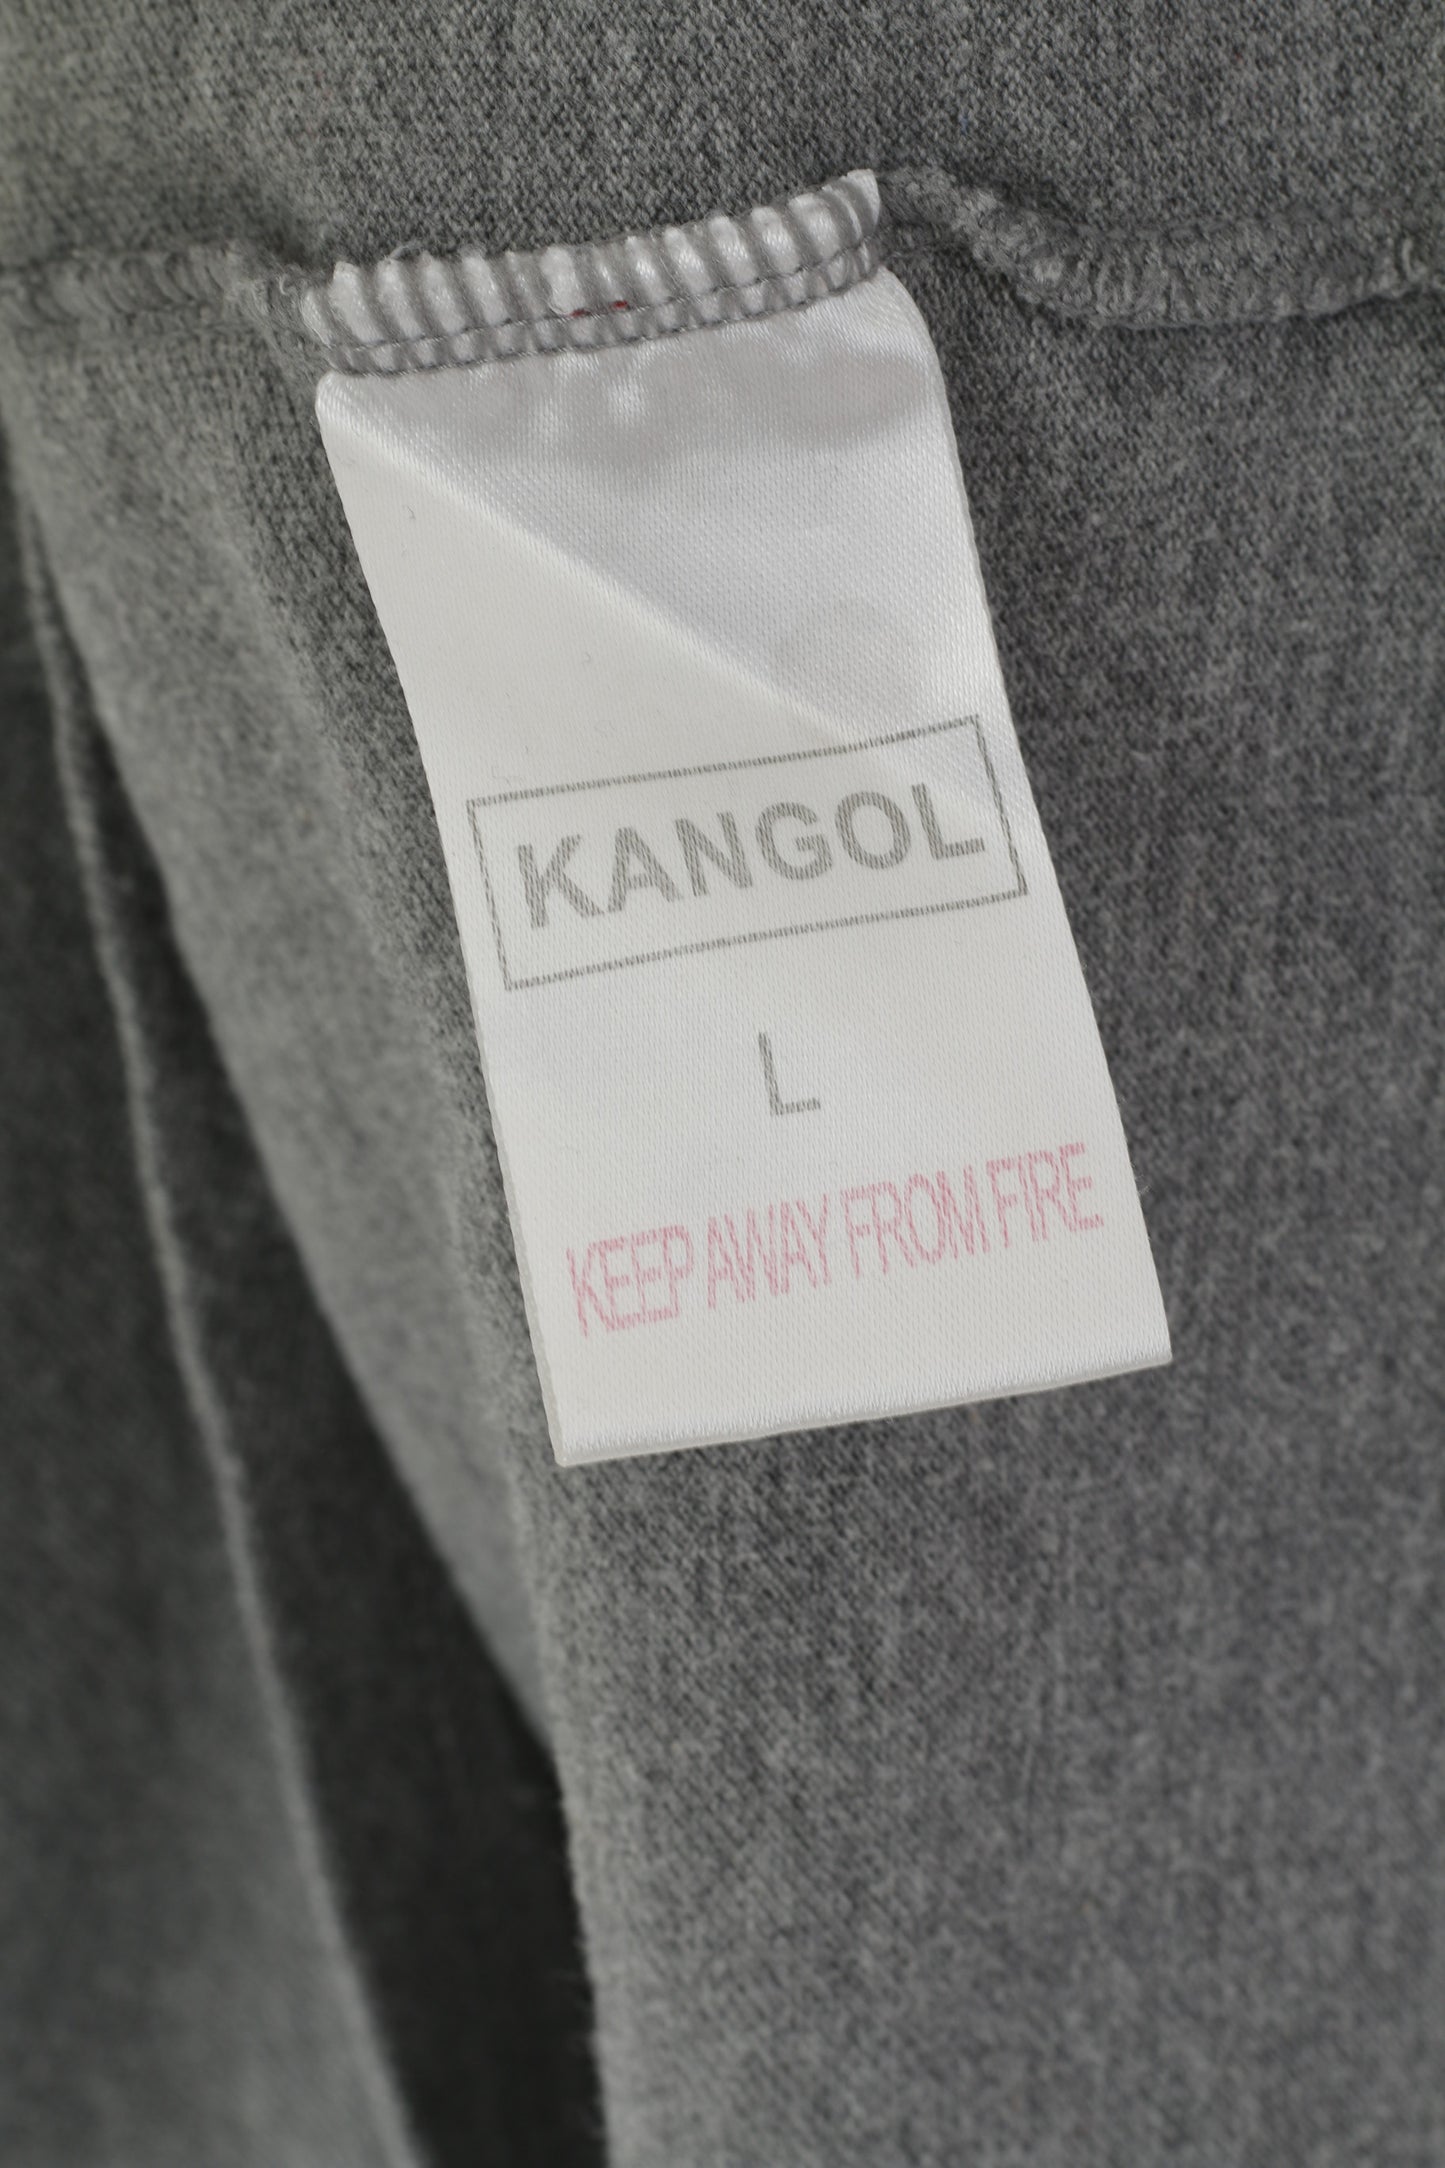 Kangol Men L (M) Shirt Grey Cotton Plain V Neck Vintage Short Sleeve Top